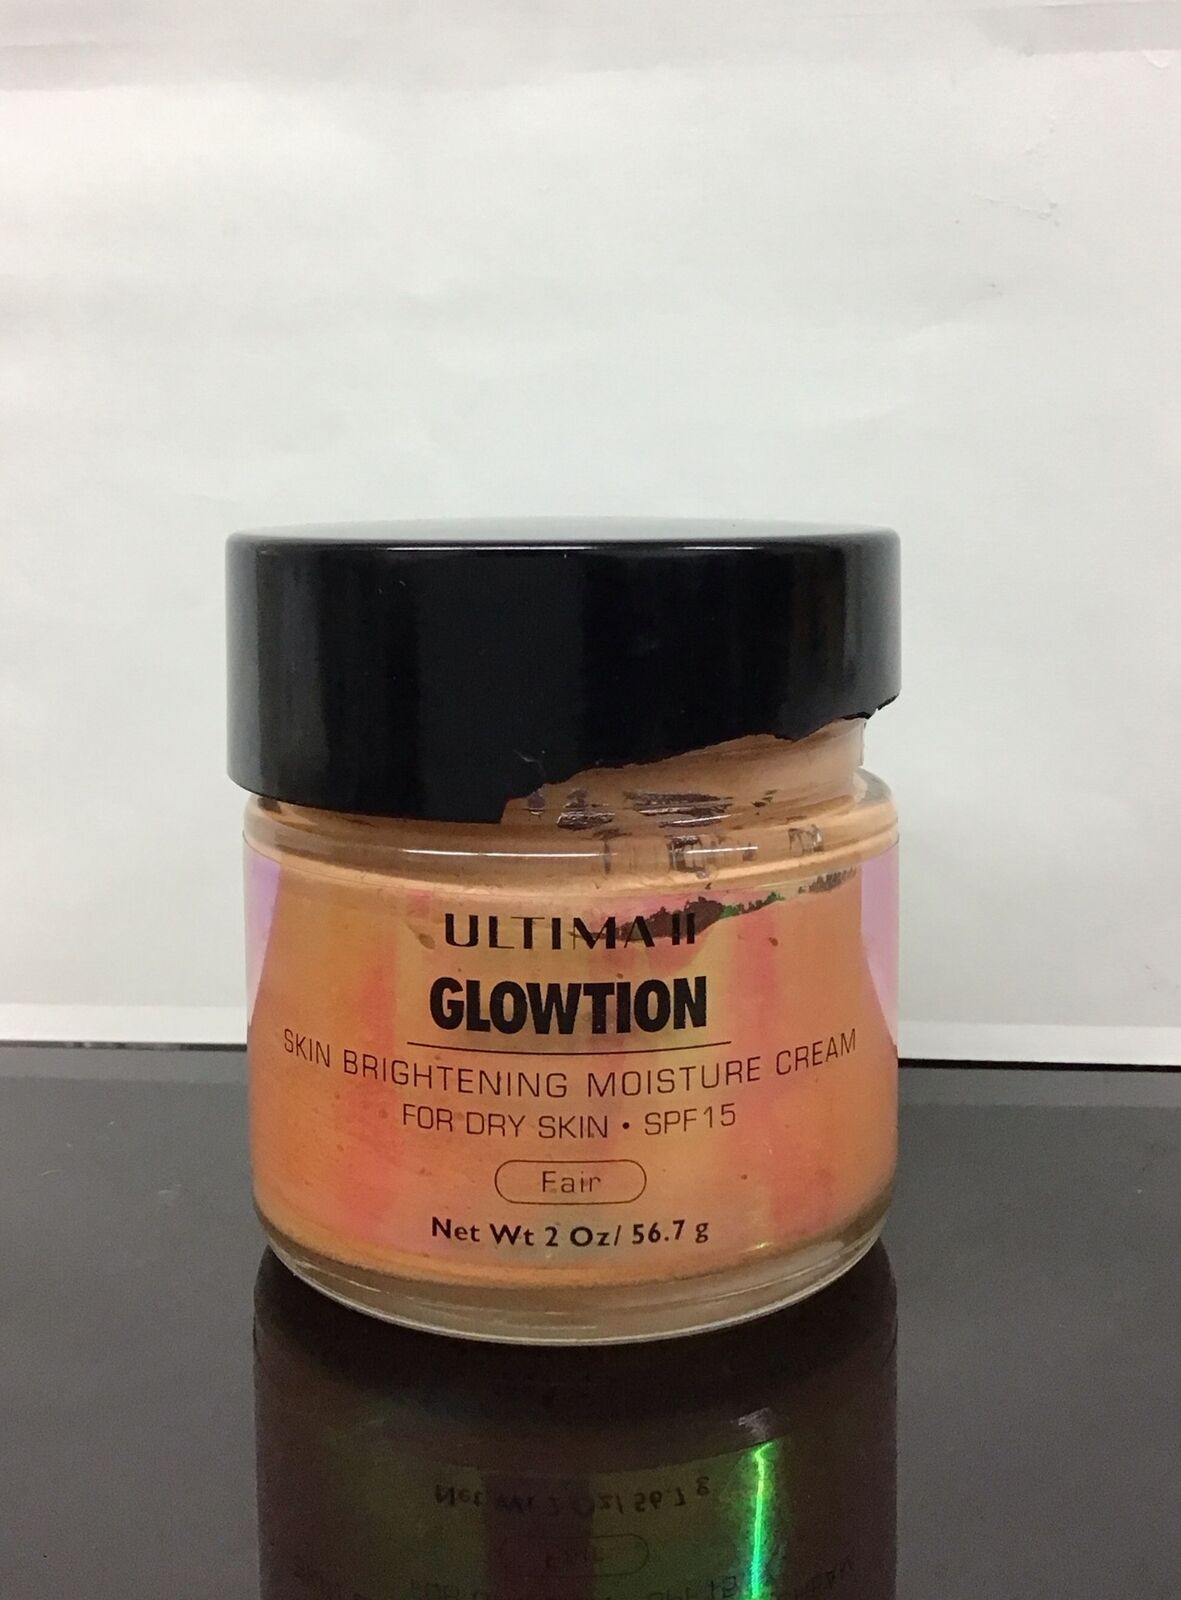 Ultima II Glowtion Skin Brightening Moisture Cream | FAIR |2 Oz, Read Descript